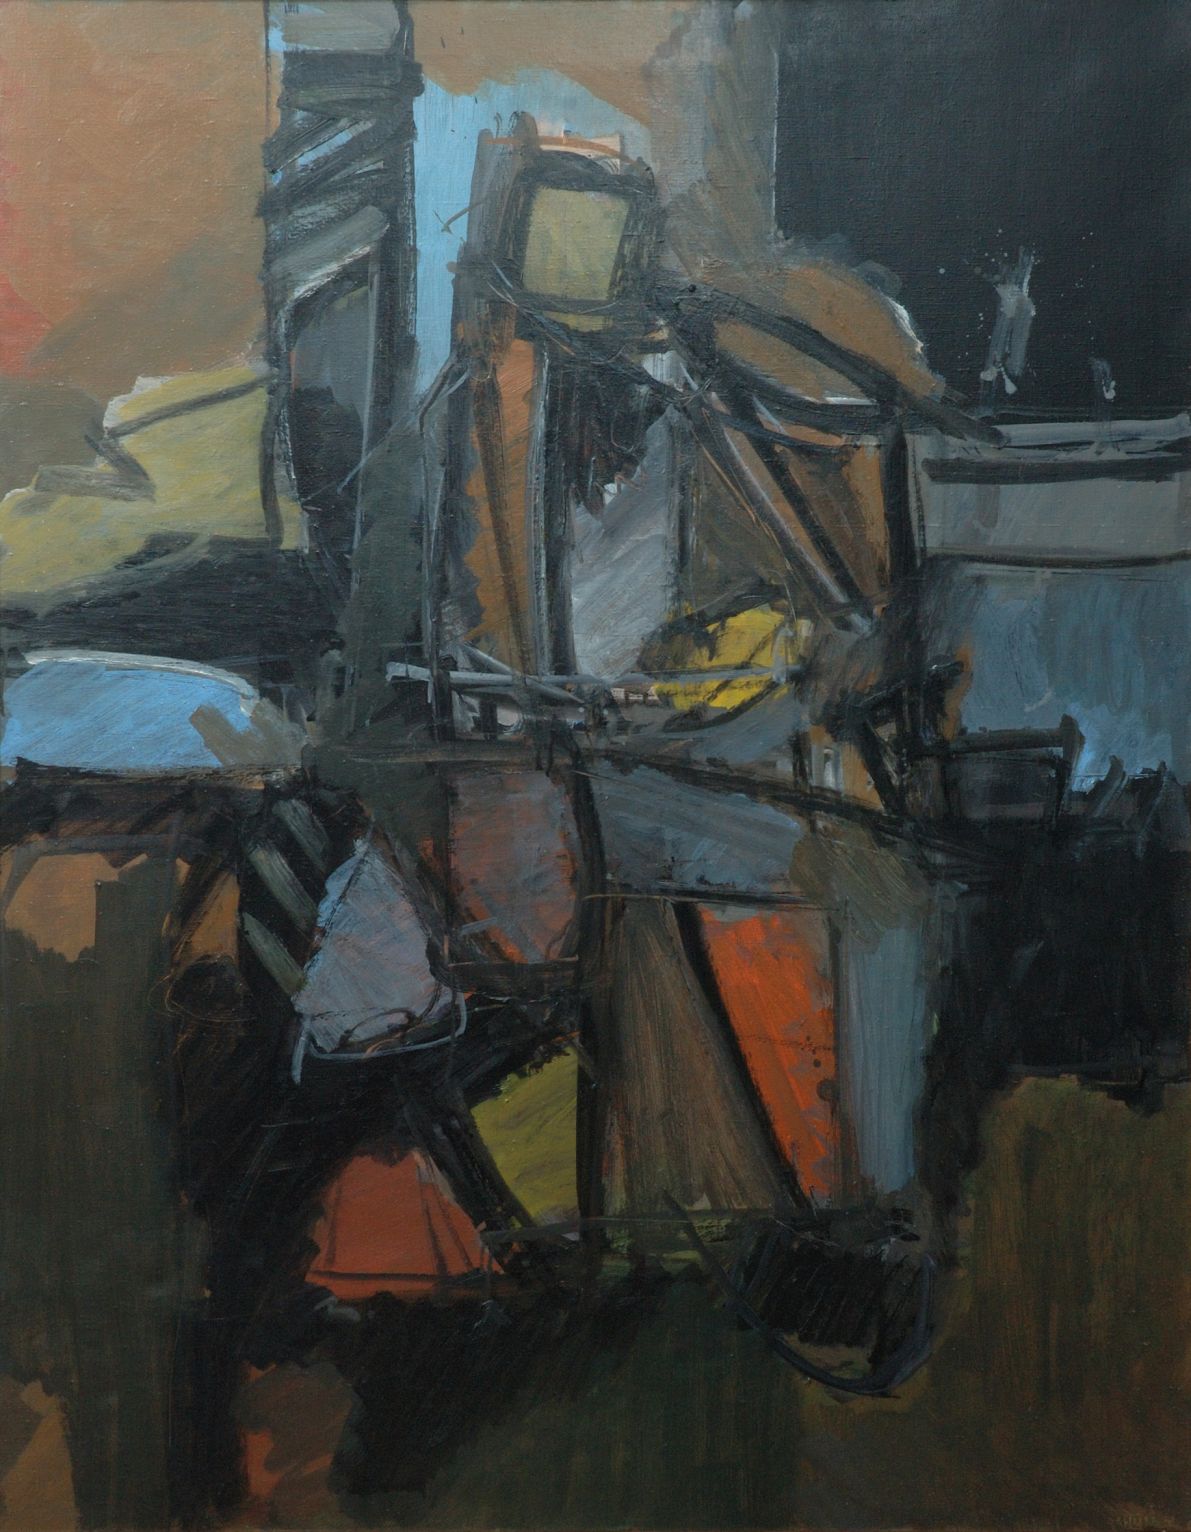 En recuerdo al pintor Aguayo (1982) - Daniel Sahún